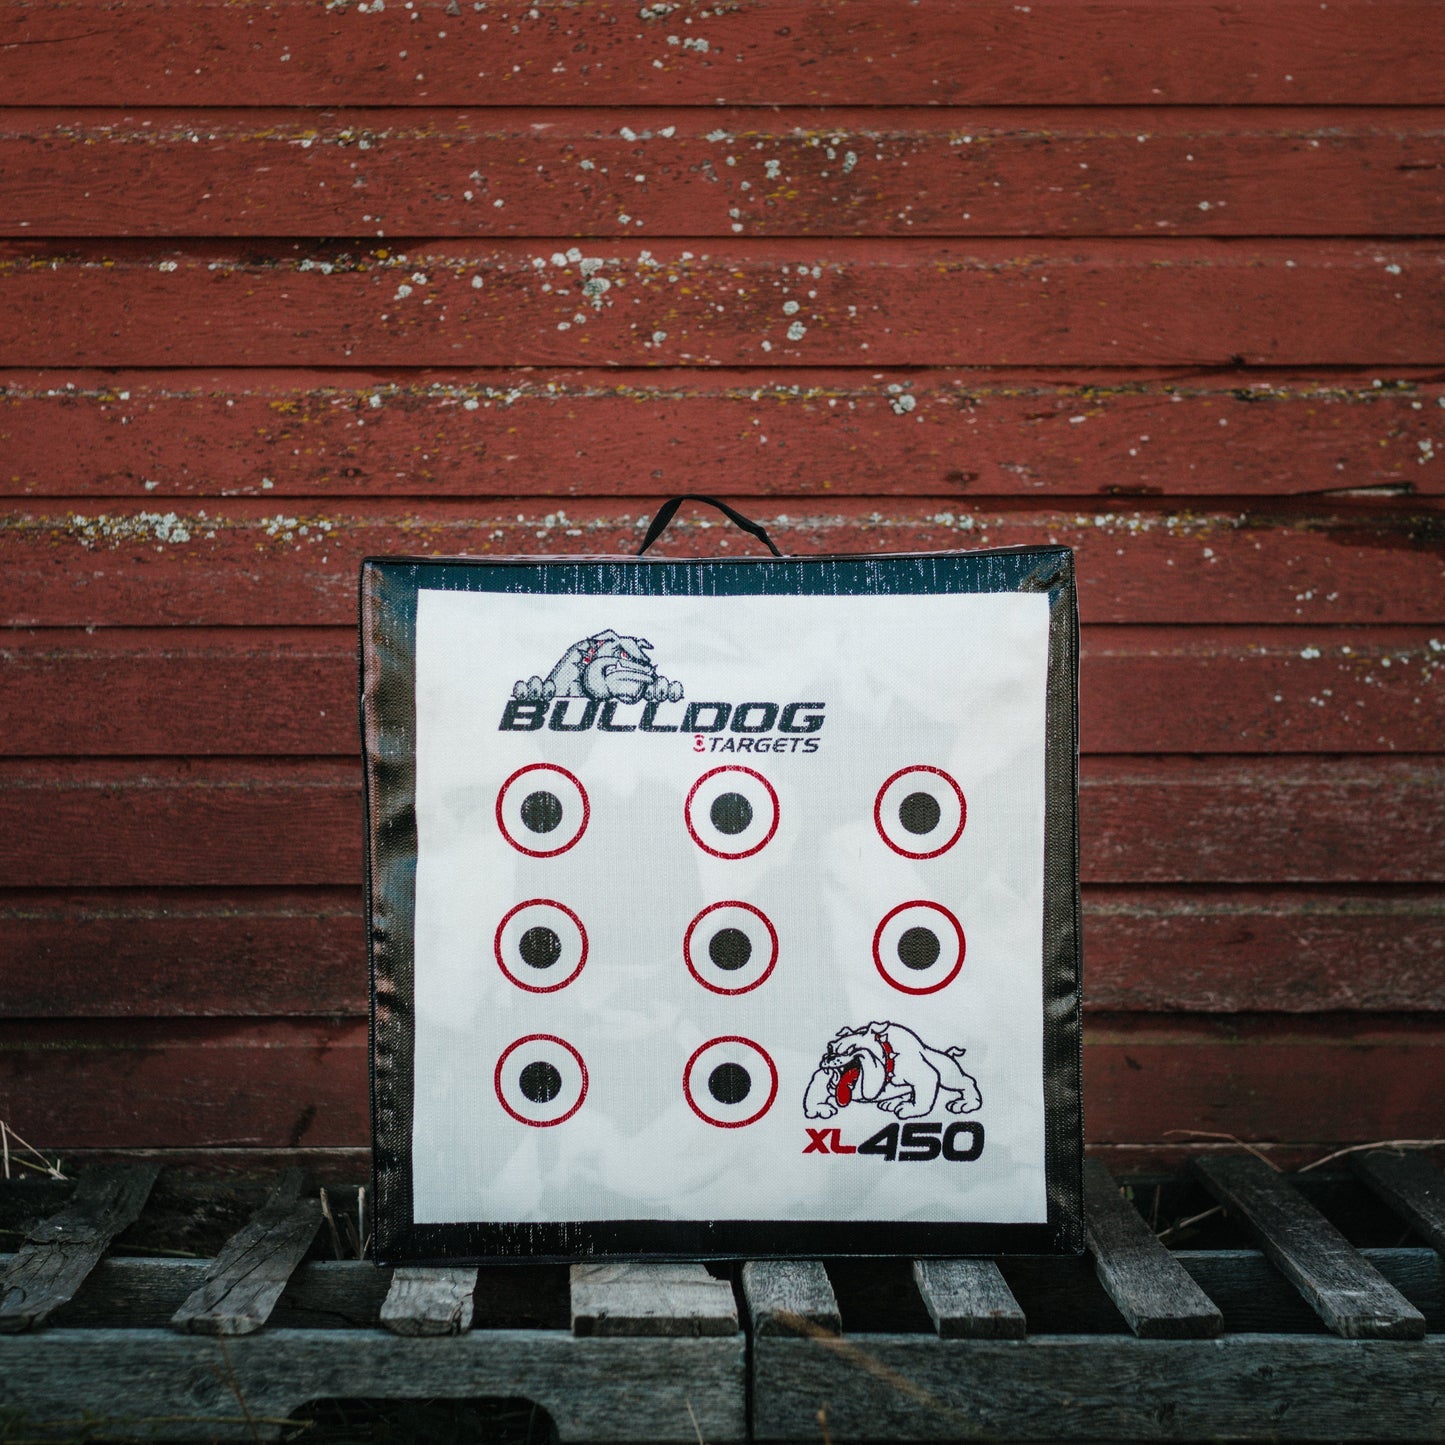 Bulldog Doghouse XL 450 Archery Target by Bulldog Archery Targets